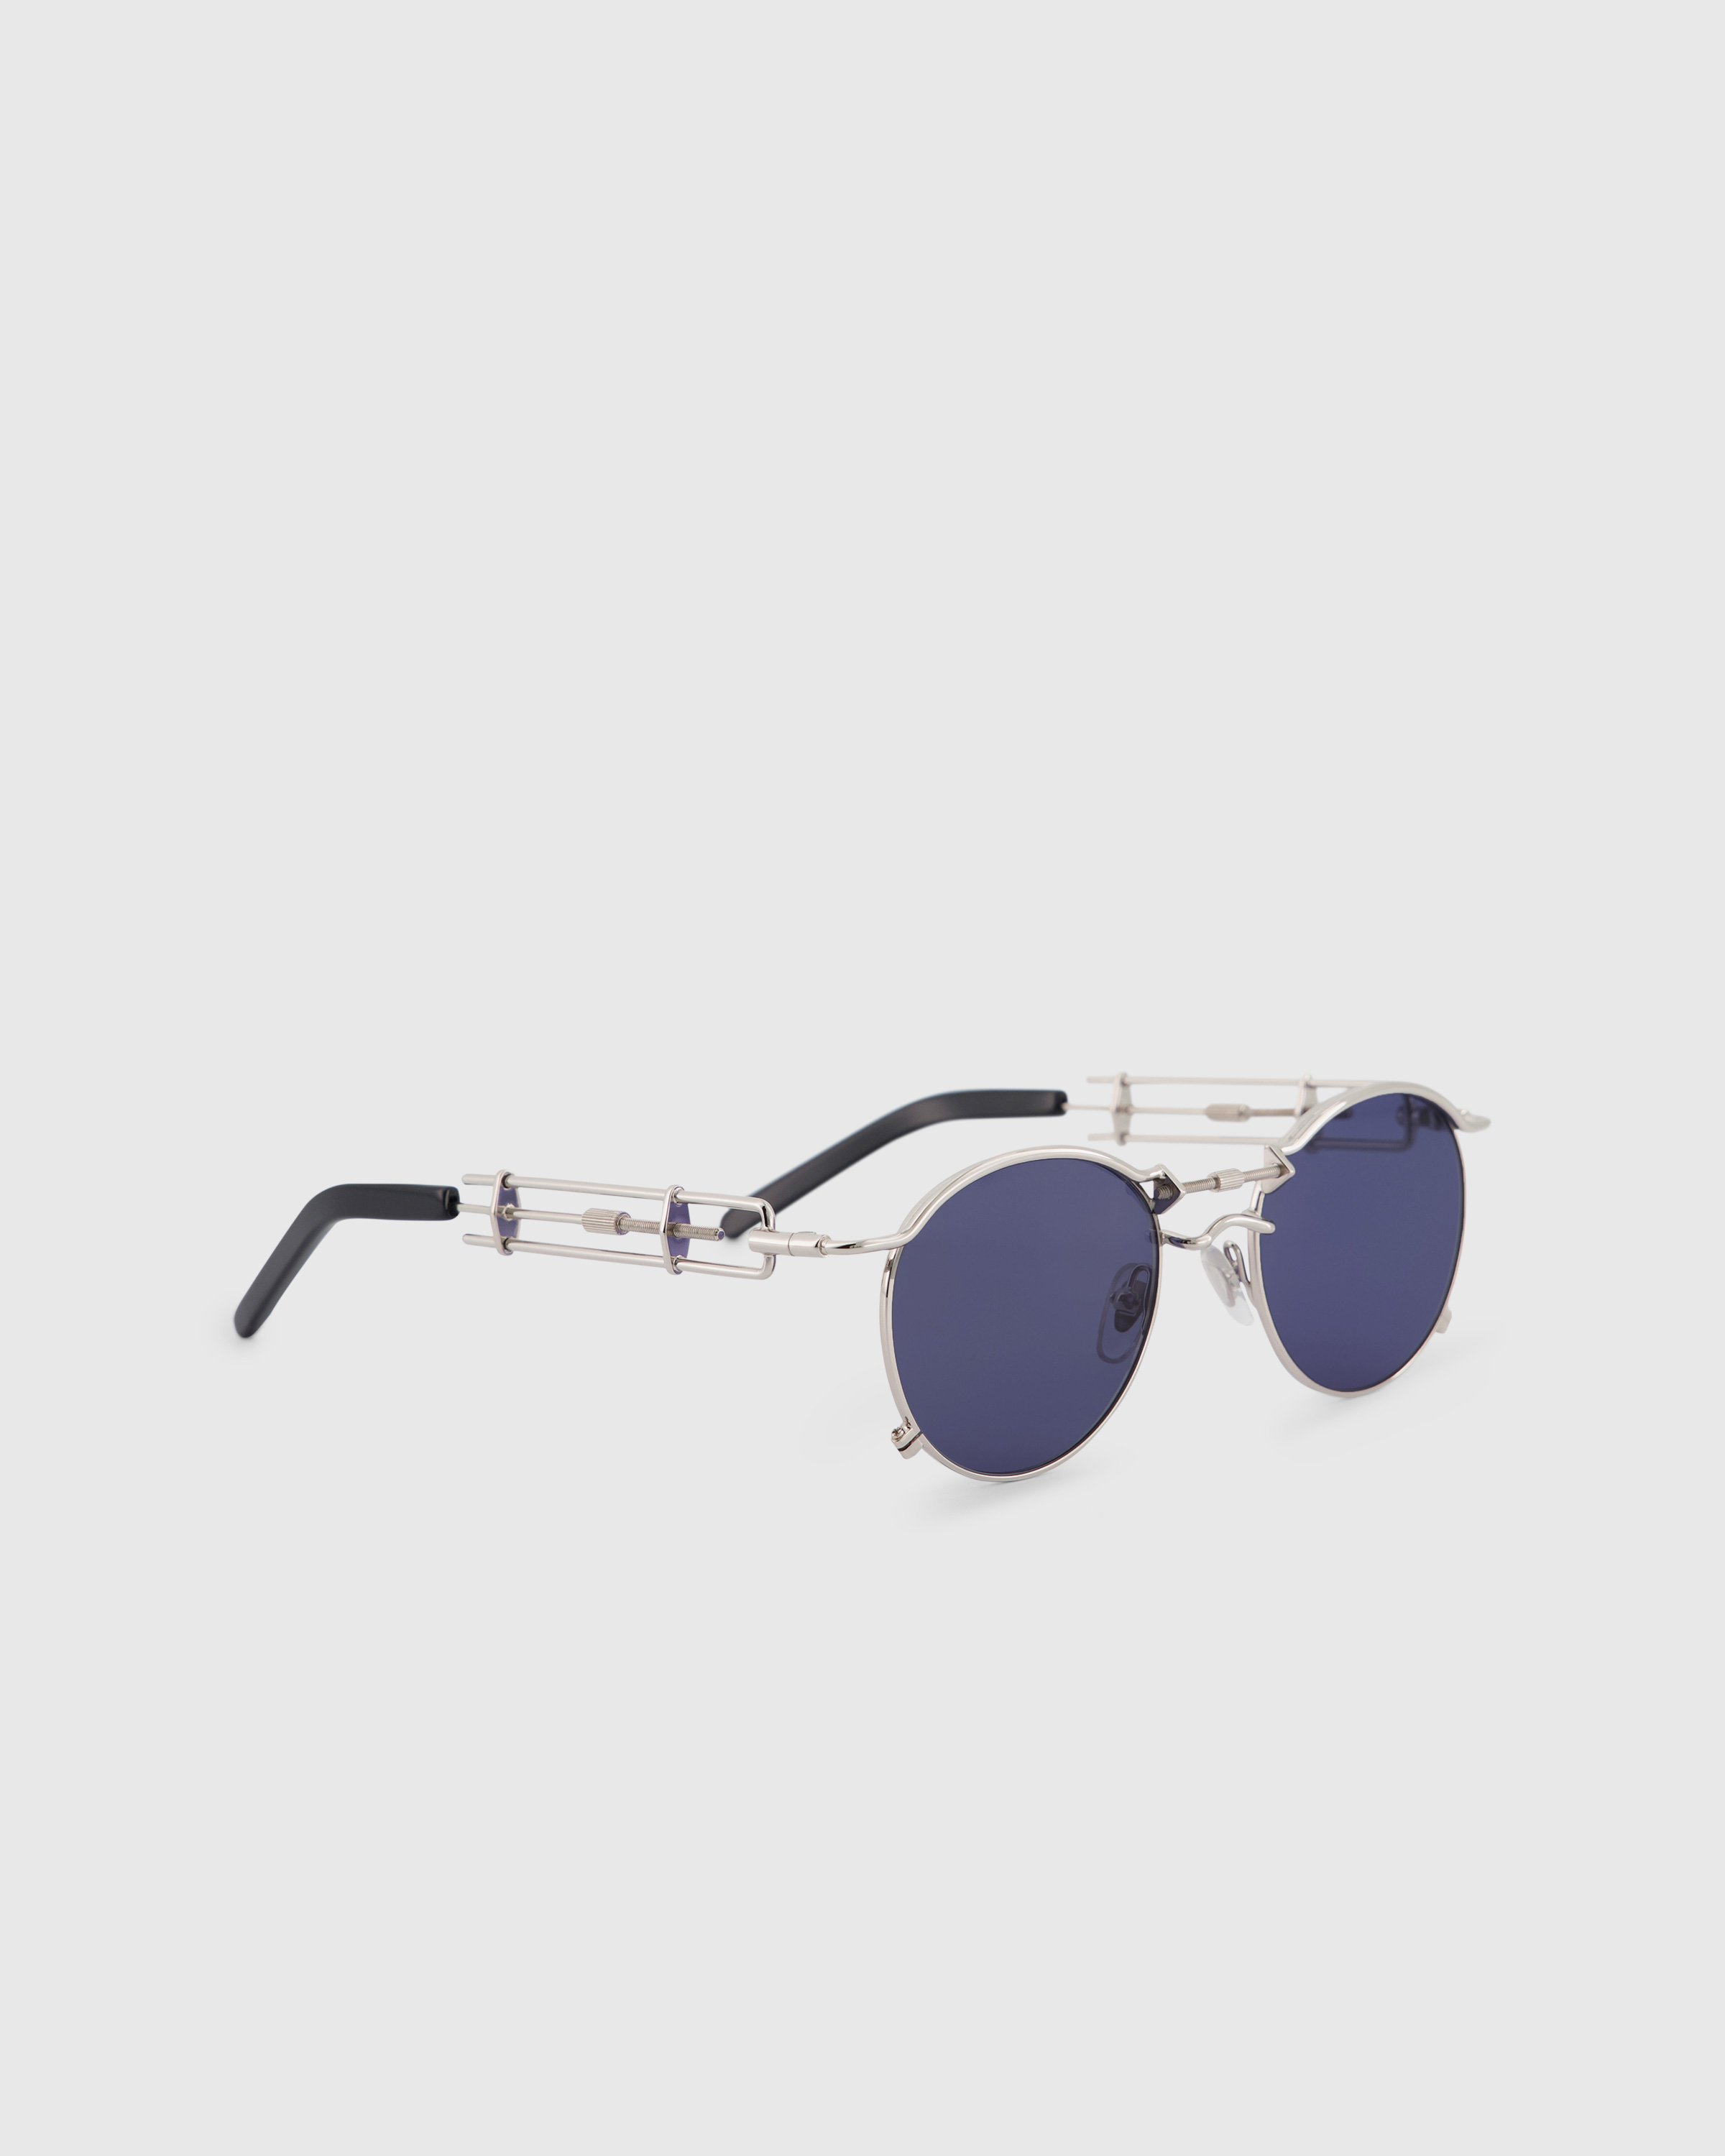 Jean Paul Gaultier x Burna Boy - 56-0174 Pas De Vis Sunglasses Silver - Accessories - Silver - Image 2